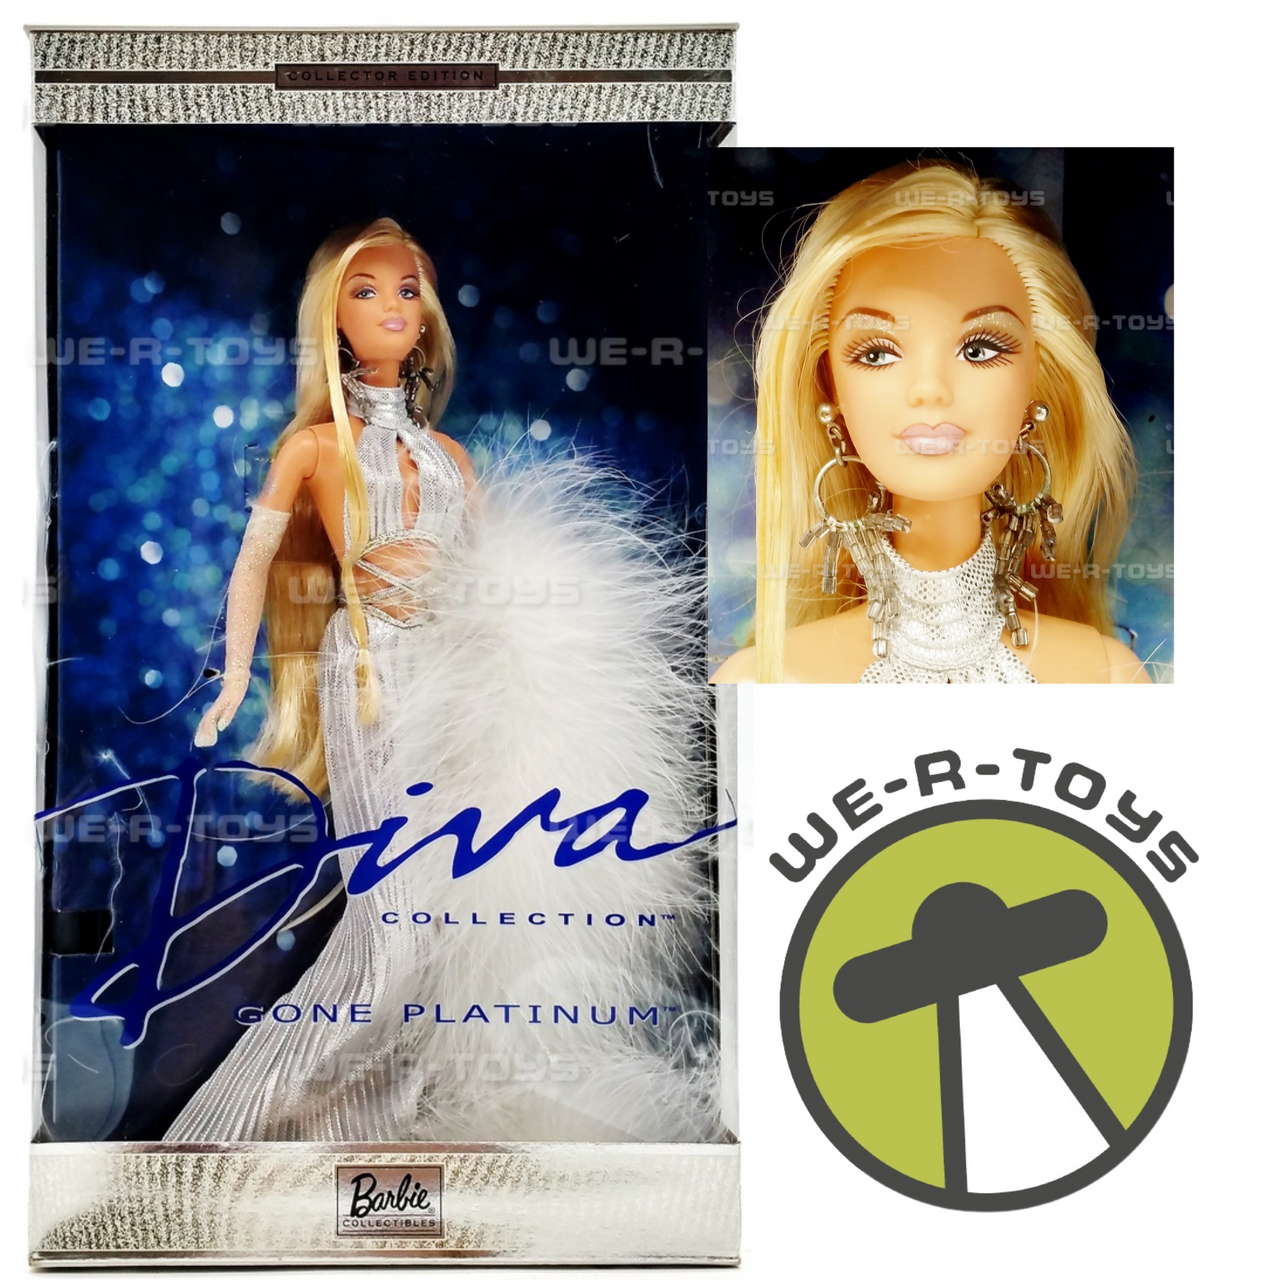 Small Barbie Box – Platinum Prop House, Inc.